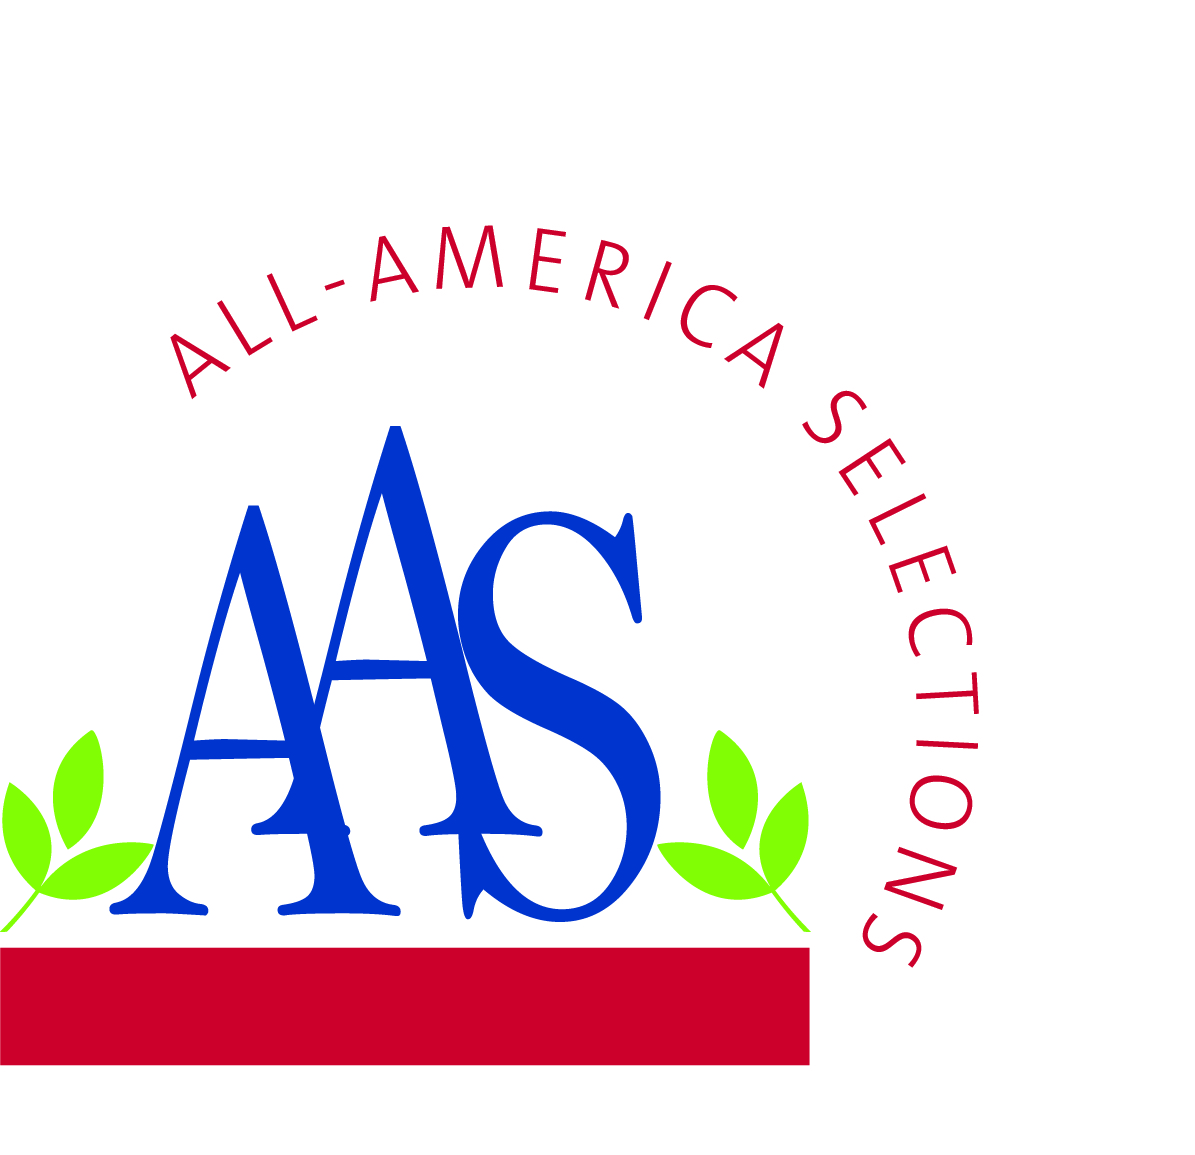 All-America Selections Logo